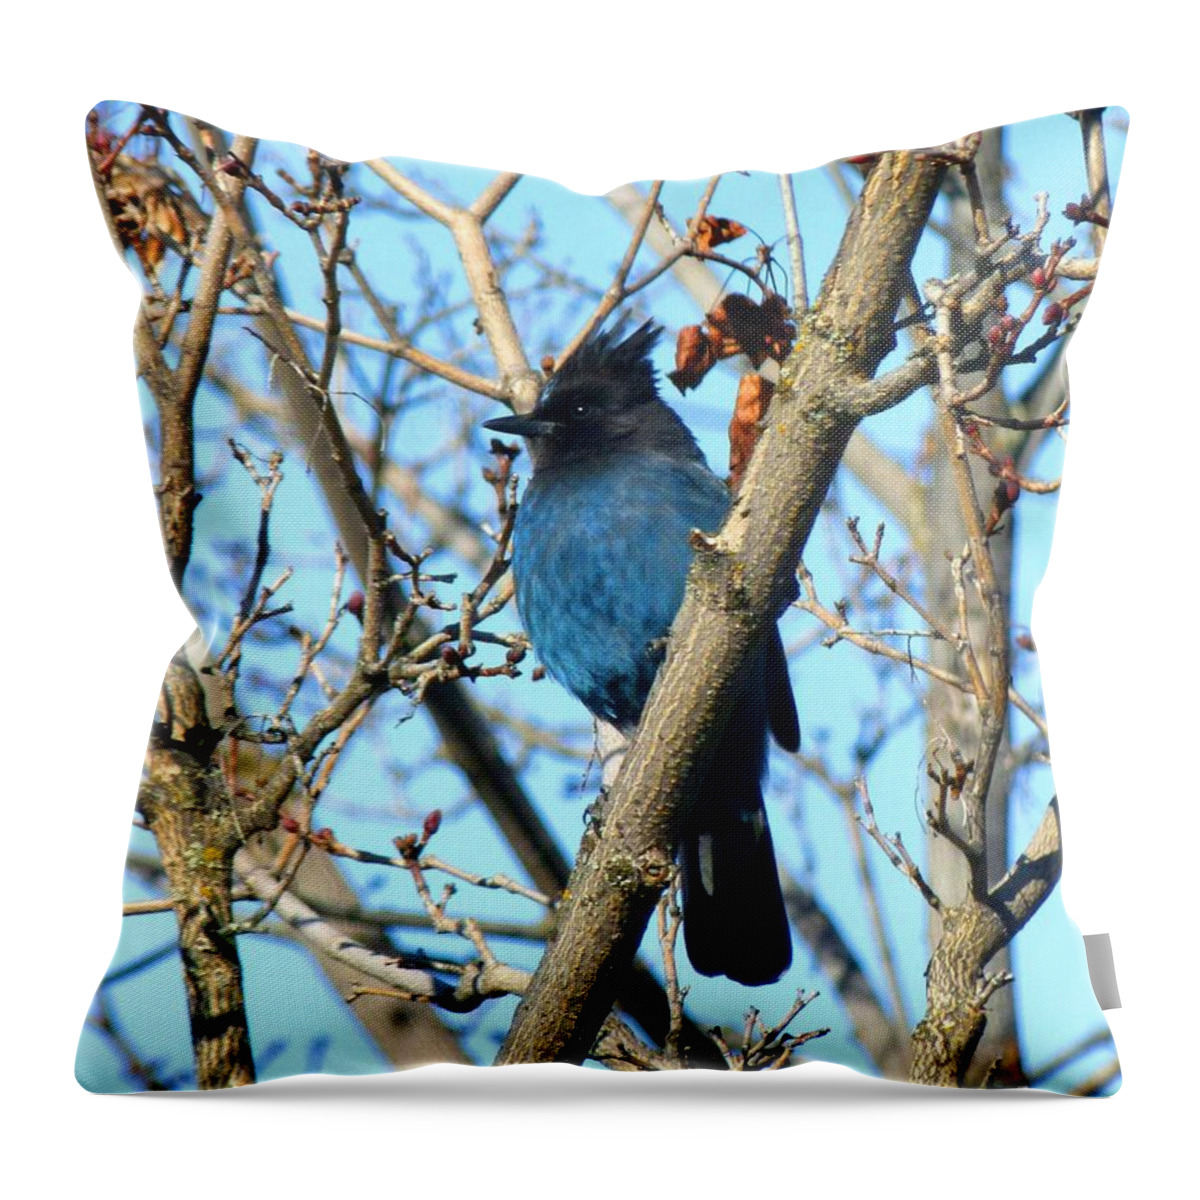 Steller's Jay In Winter Throw Pillow featuring the photograph Steller's Jay In Winter by Will Borden